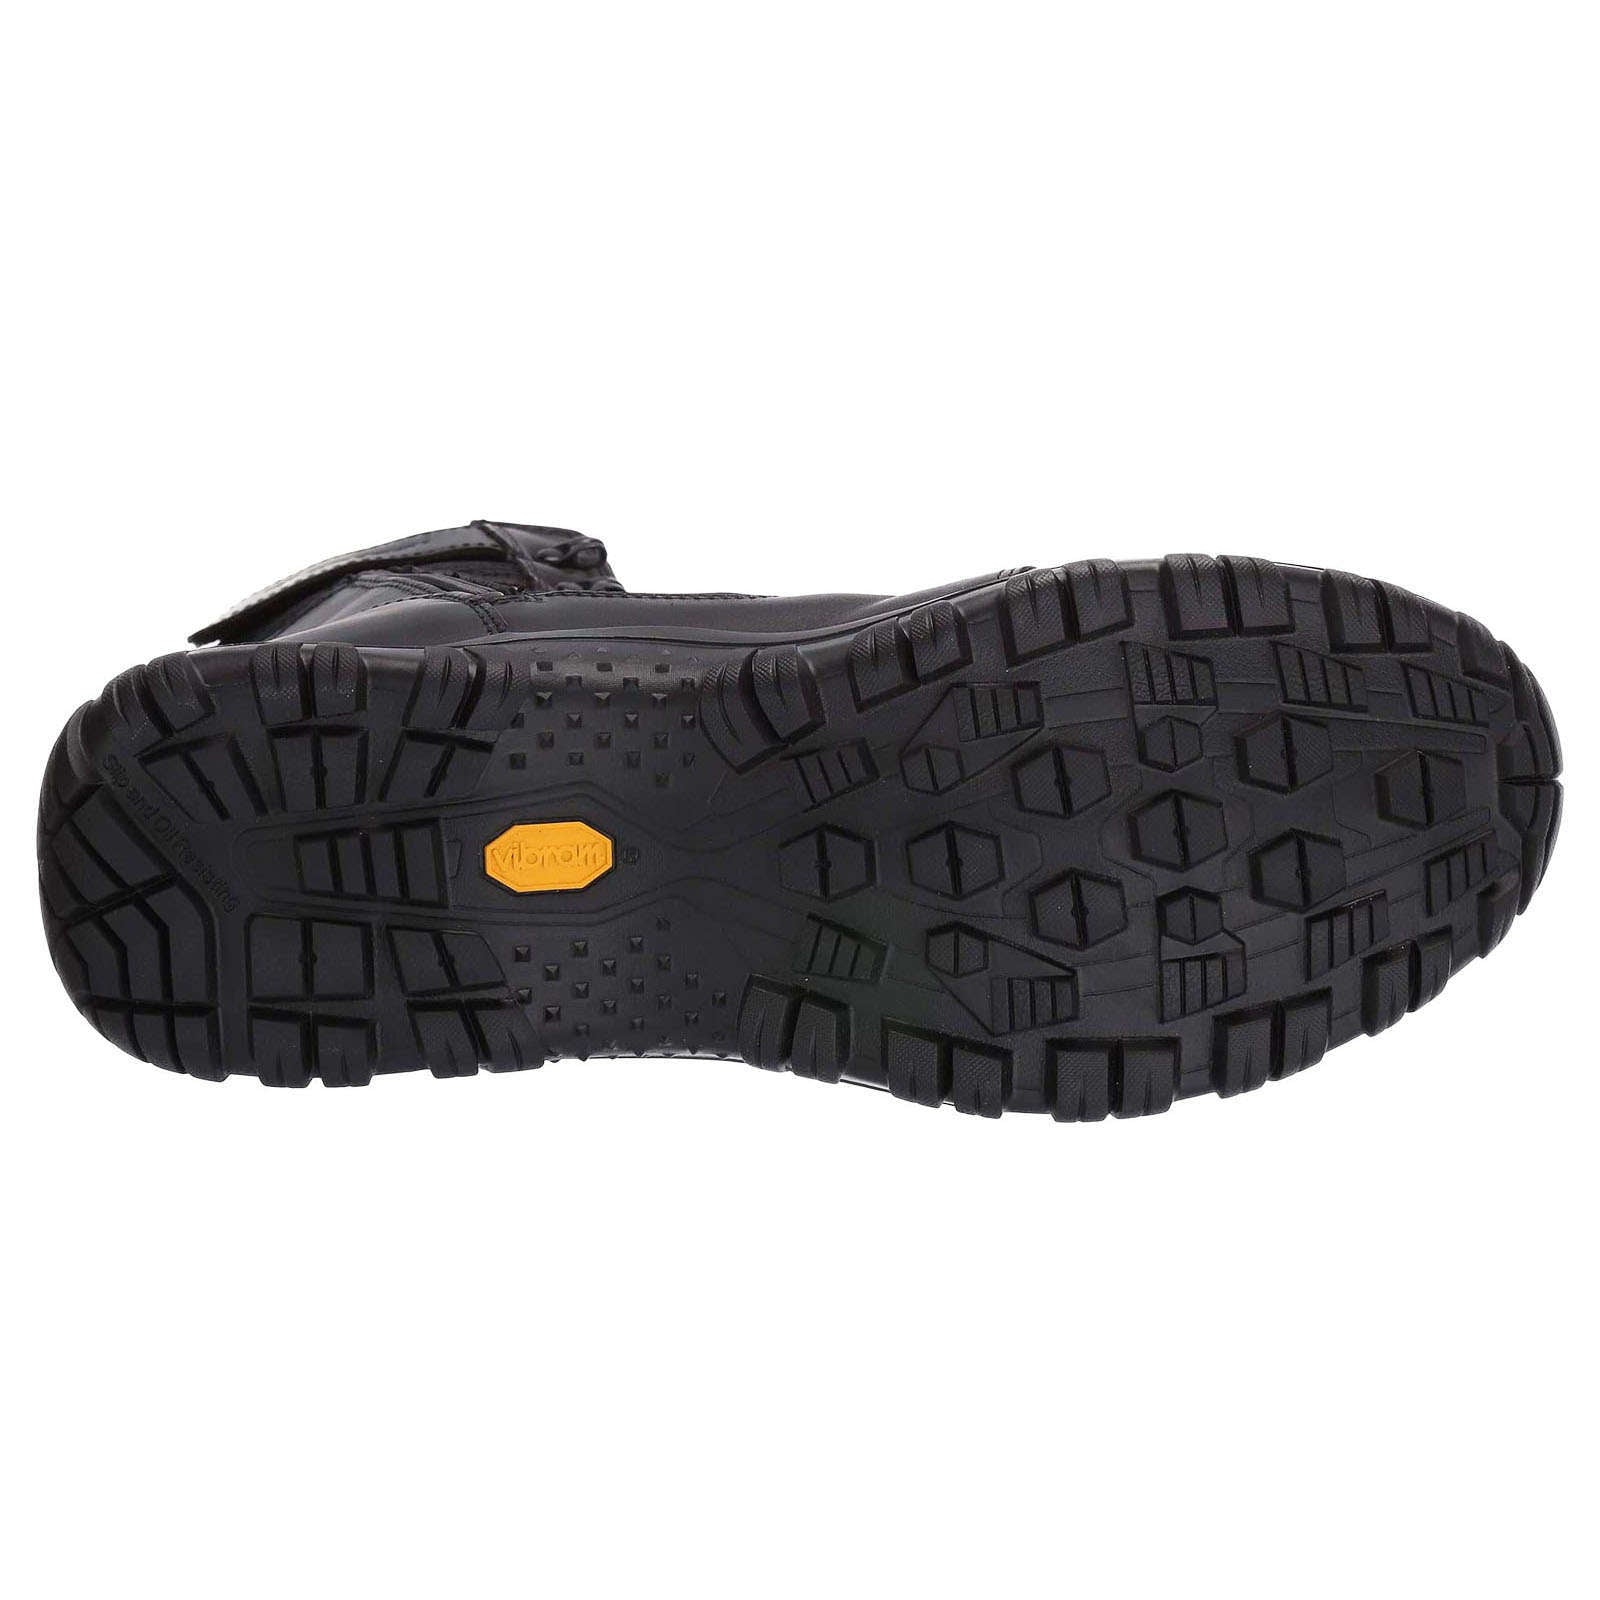 Bates Manuever Waterproof Side Zip Waterproof Leather Synthetic Men's Tactical Boots#color_black